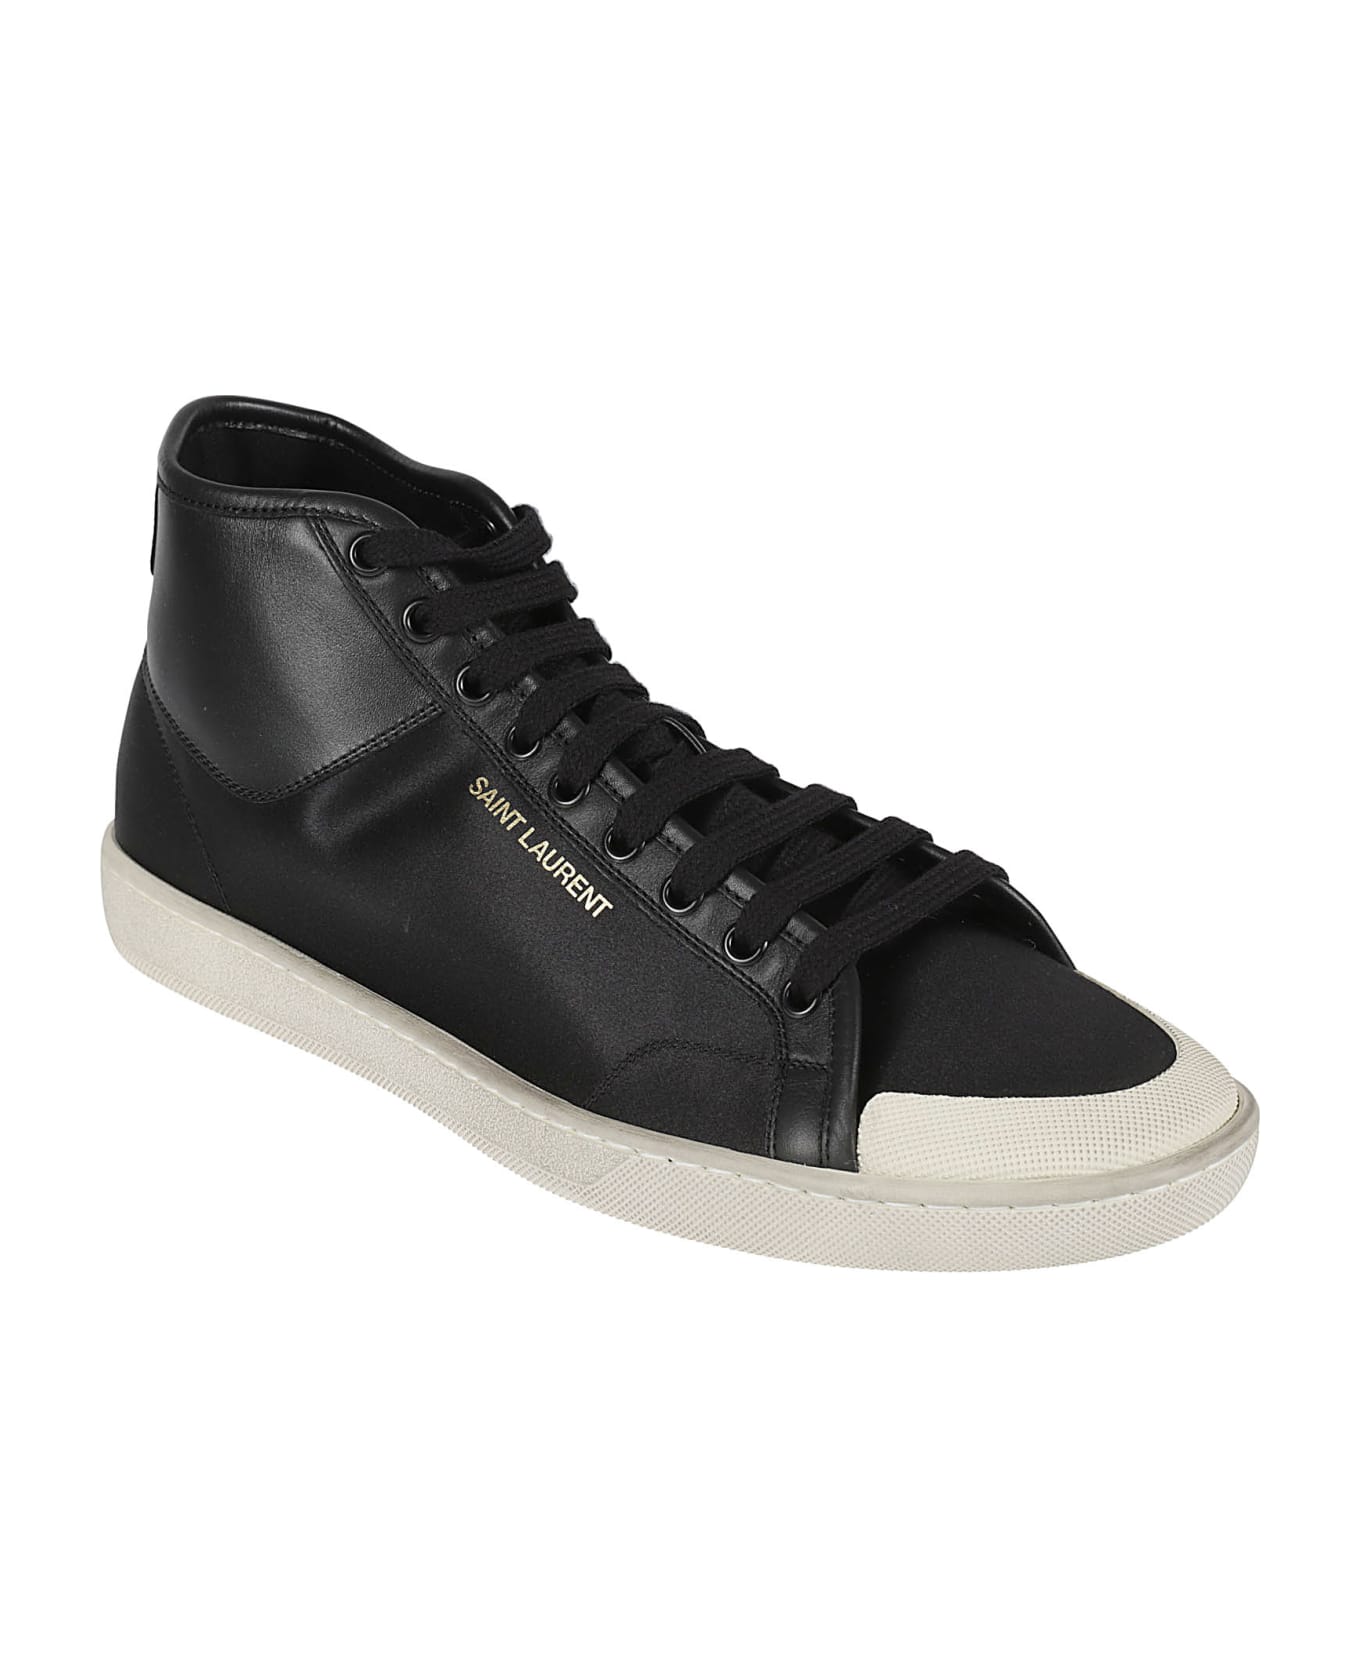 Saint Laurent Sl39 Sneakers - Black